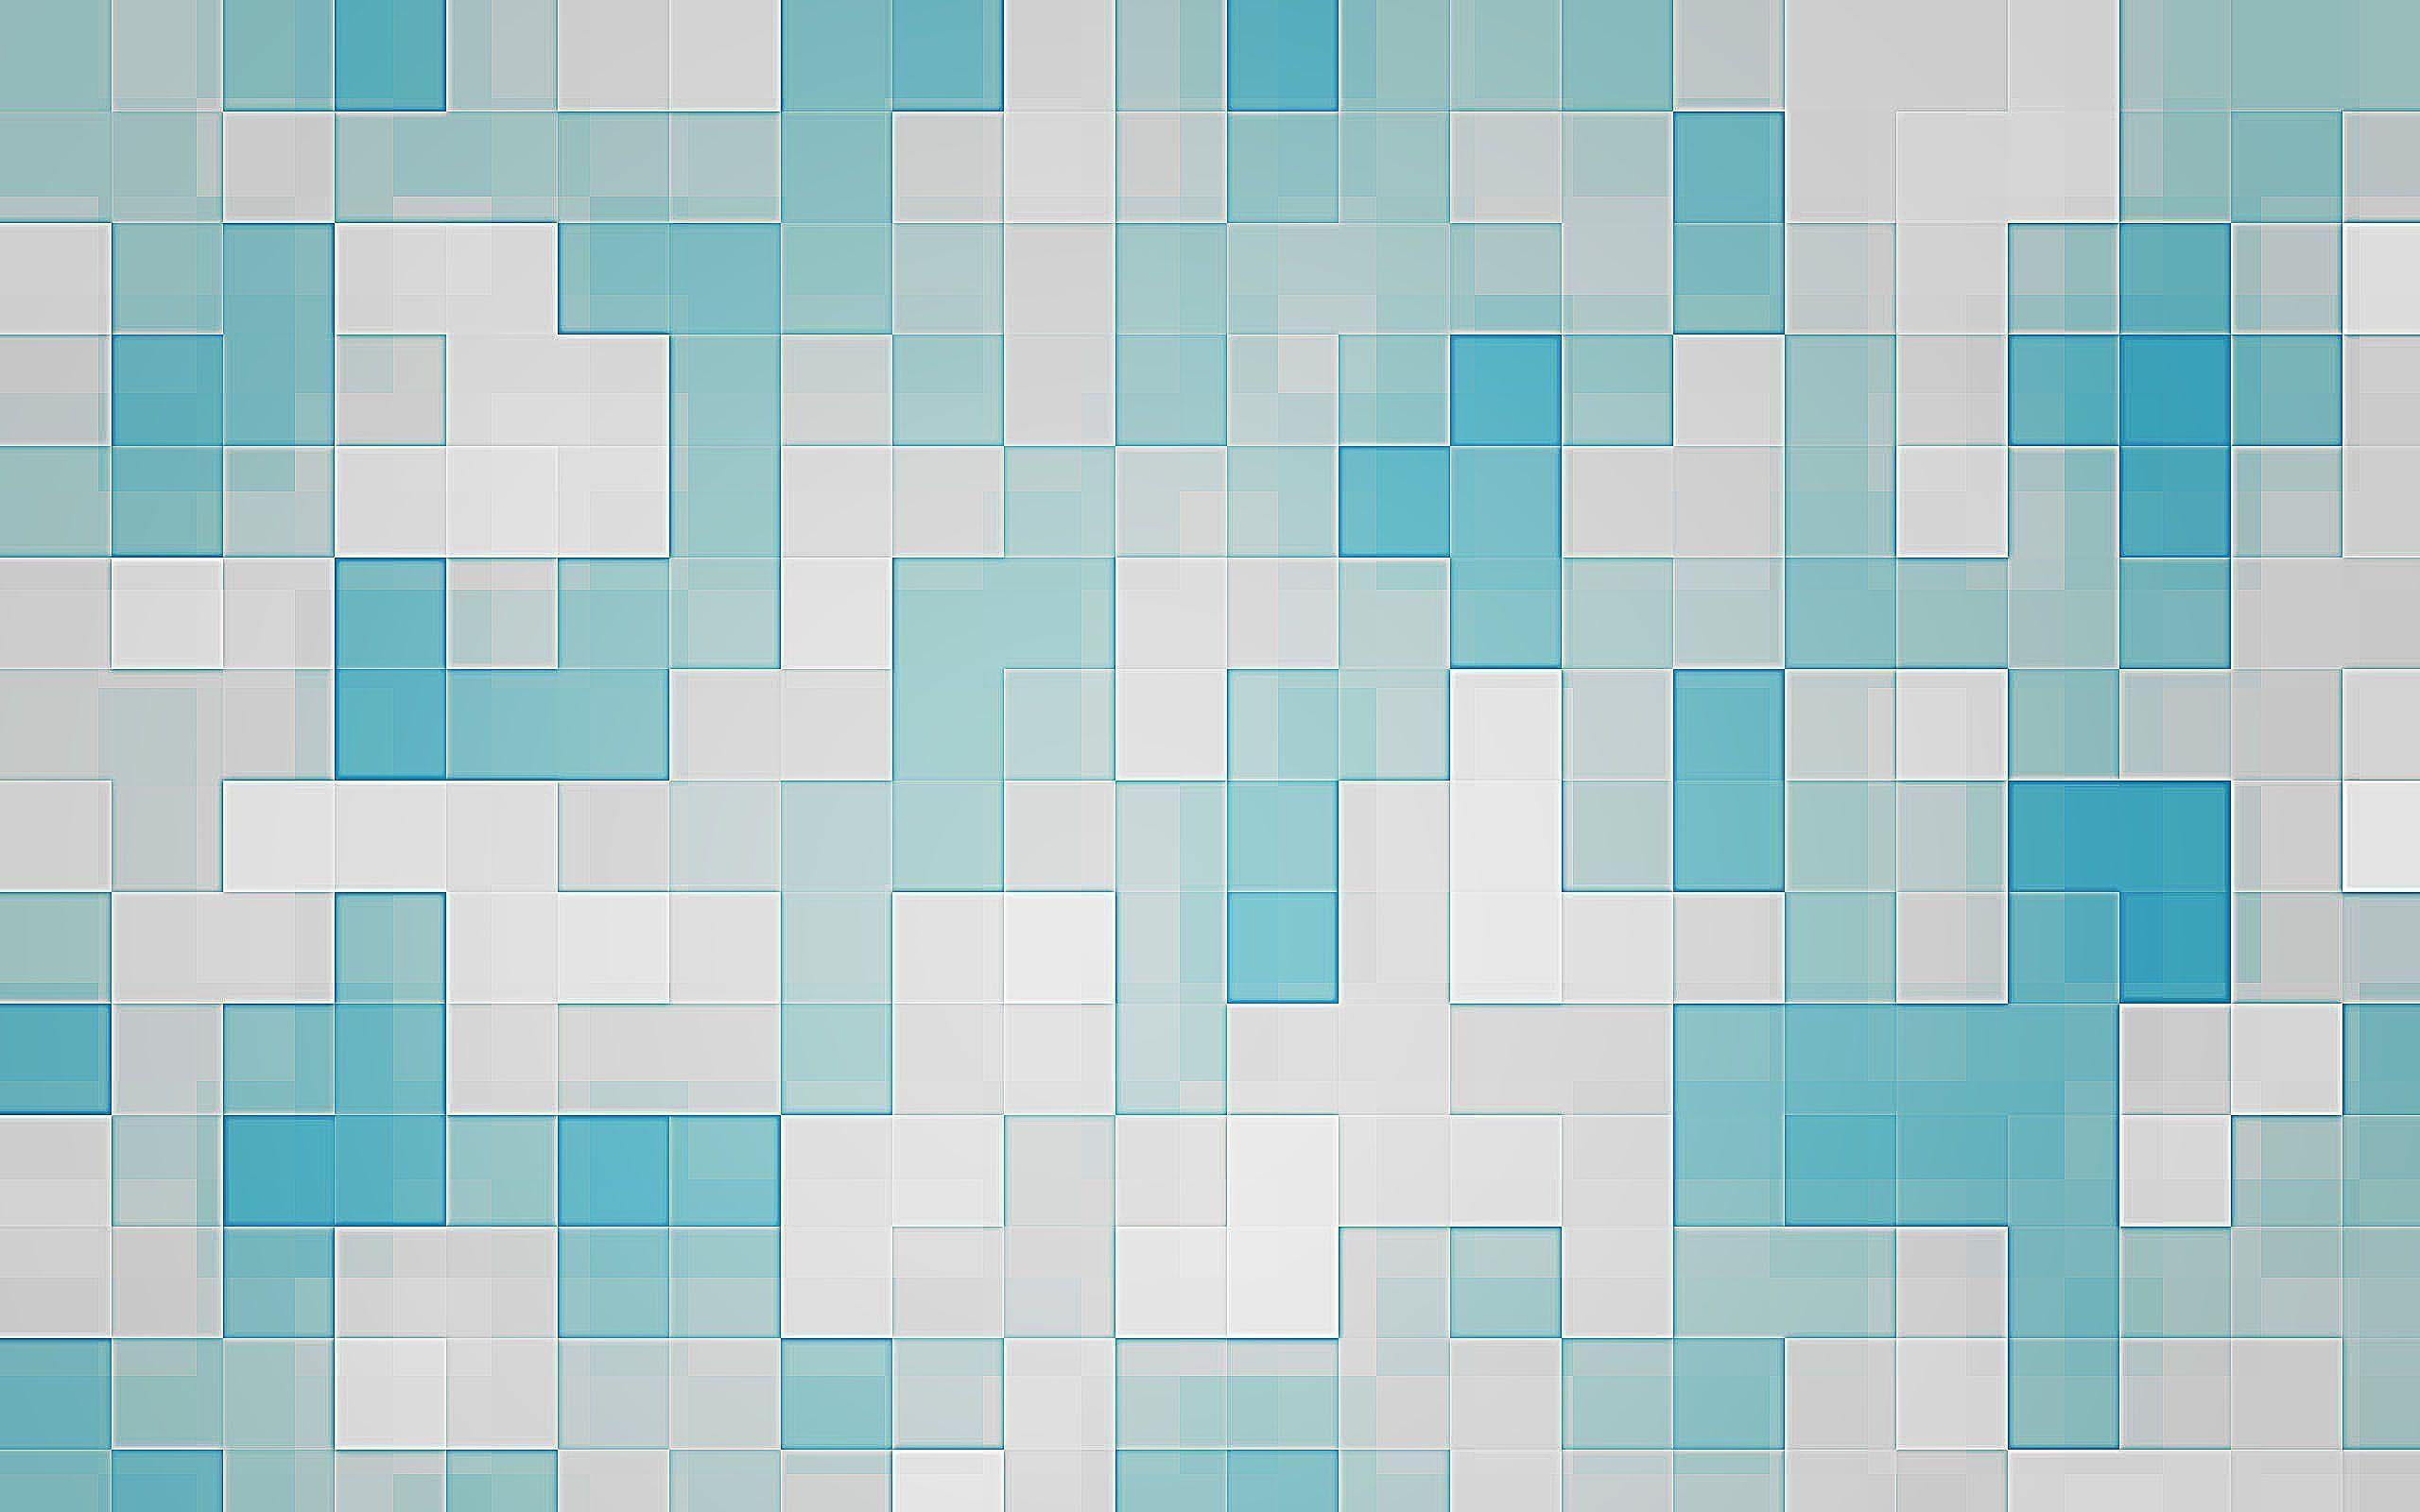 Cube Grid Mosaic Free Wallpaper 2560x1600 px Free Download